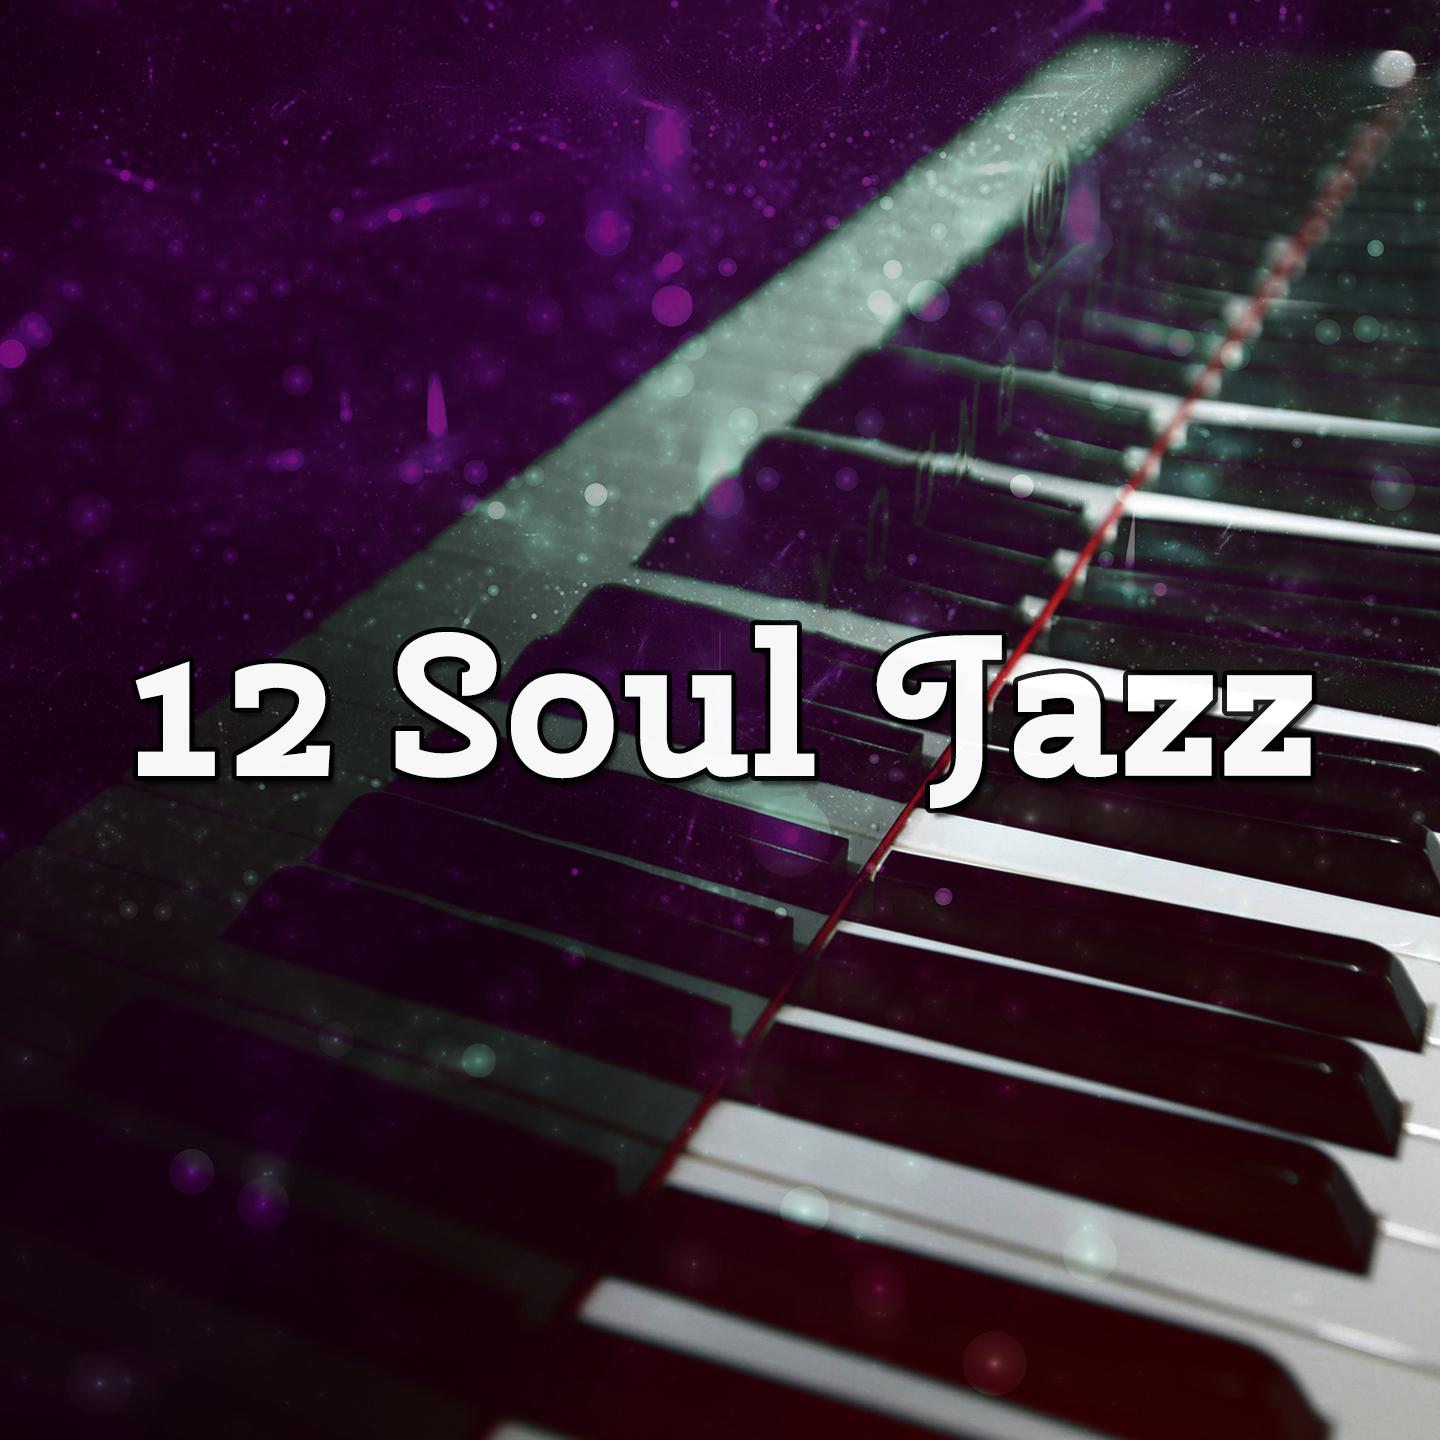 12 Soul Jazz